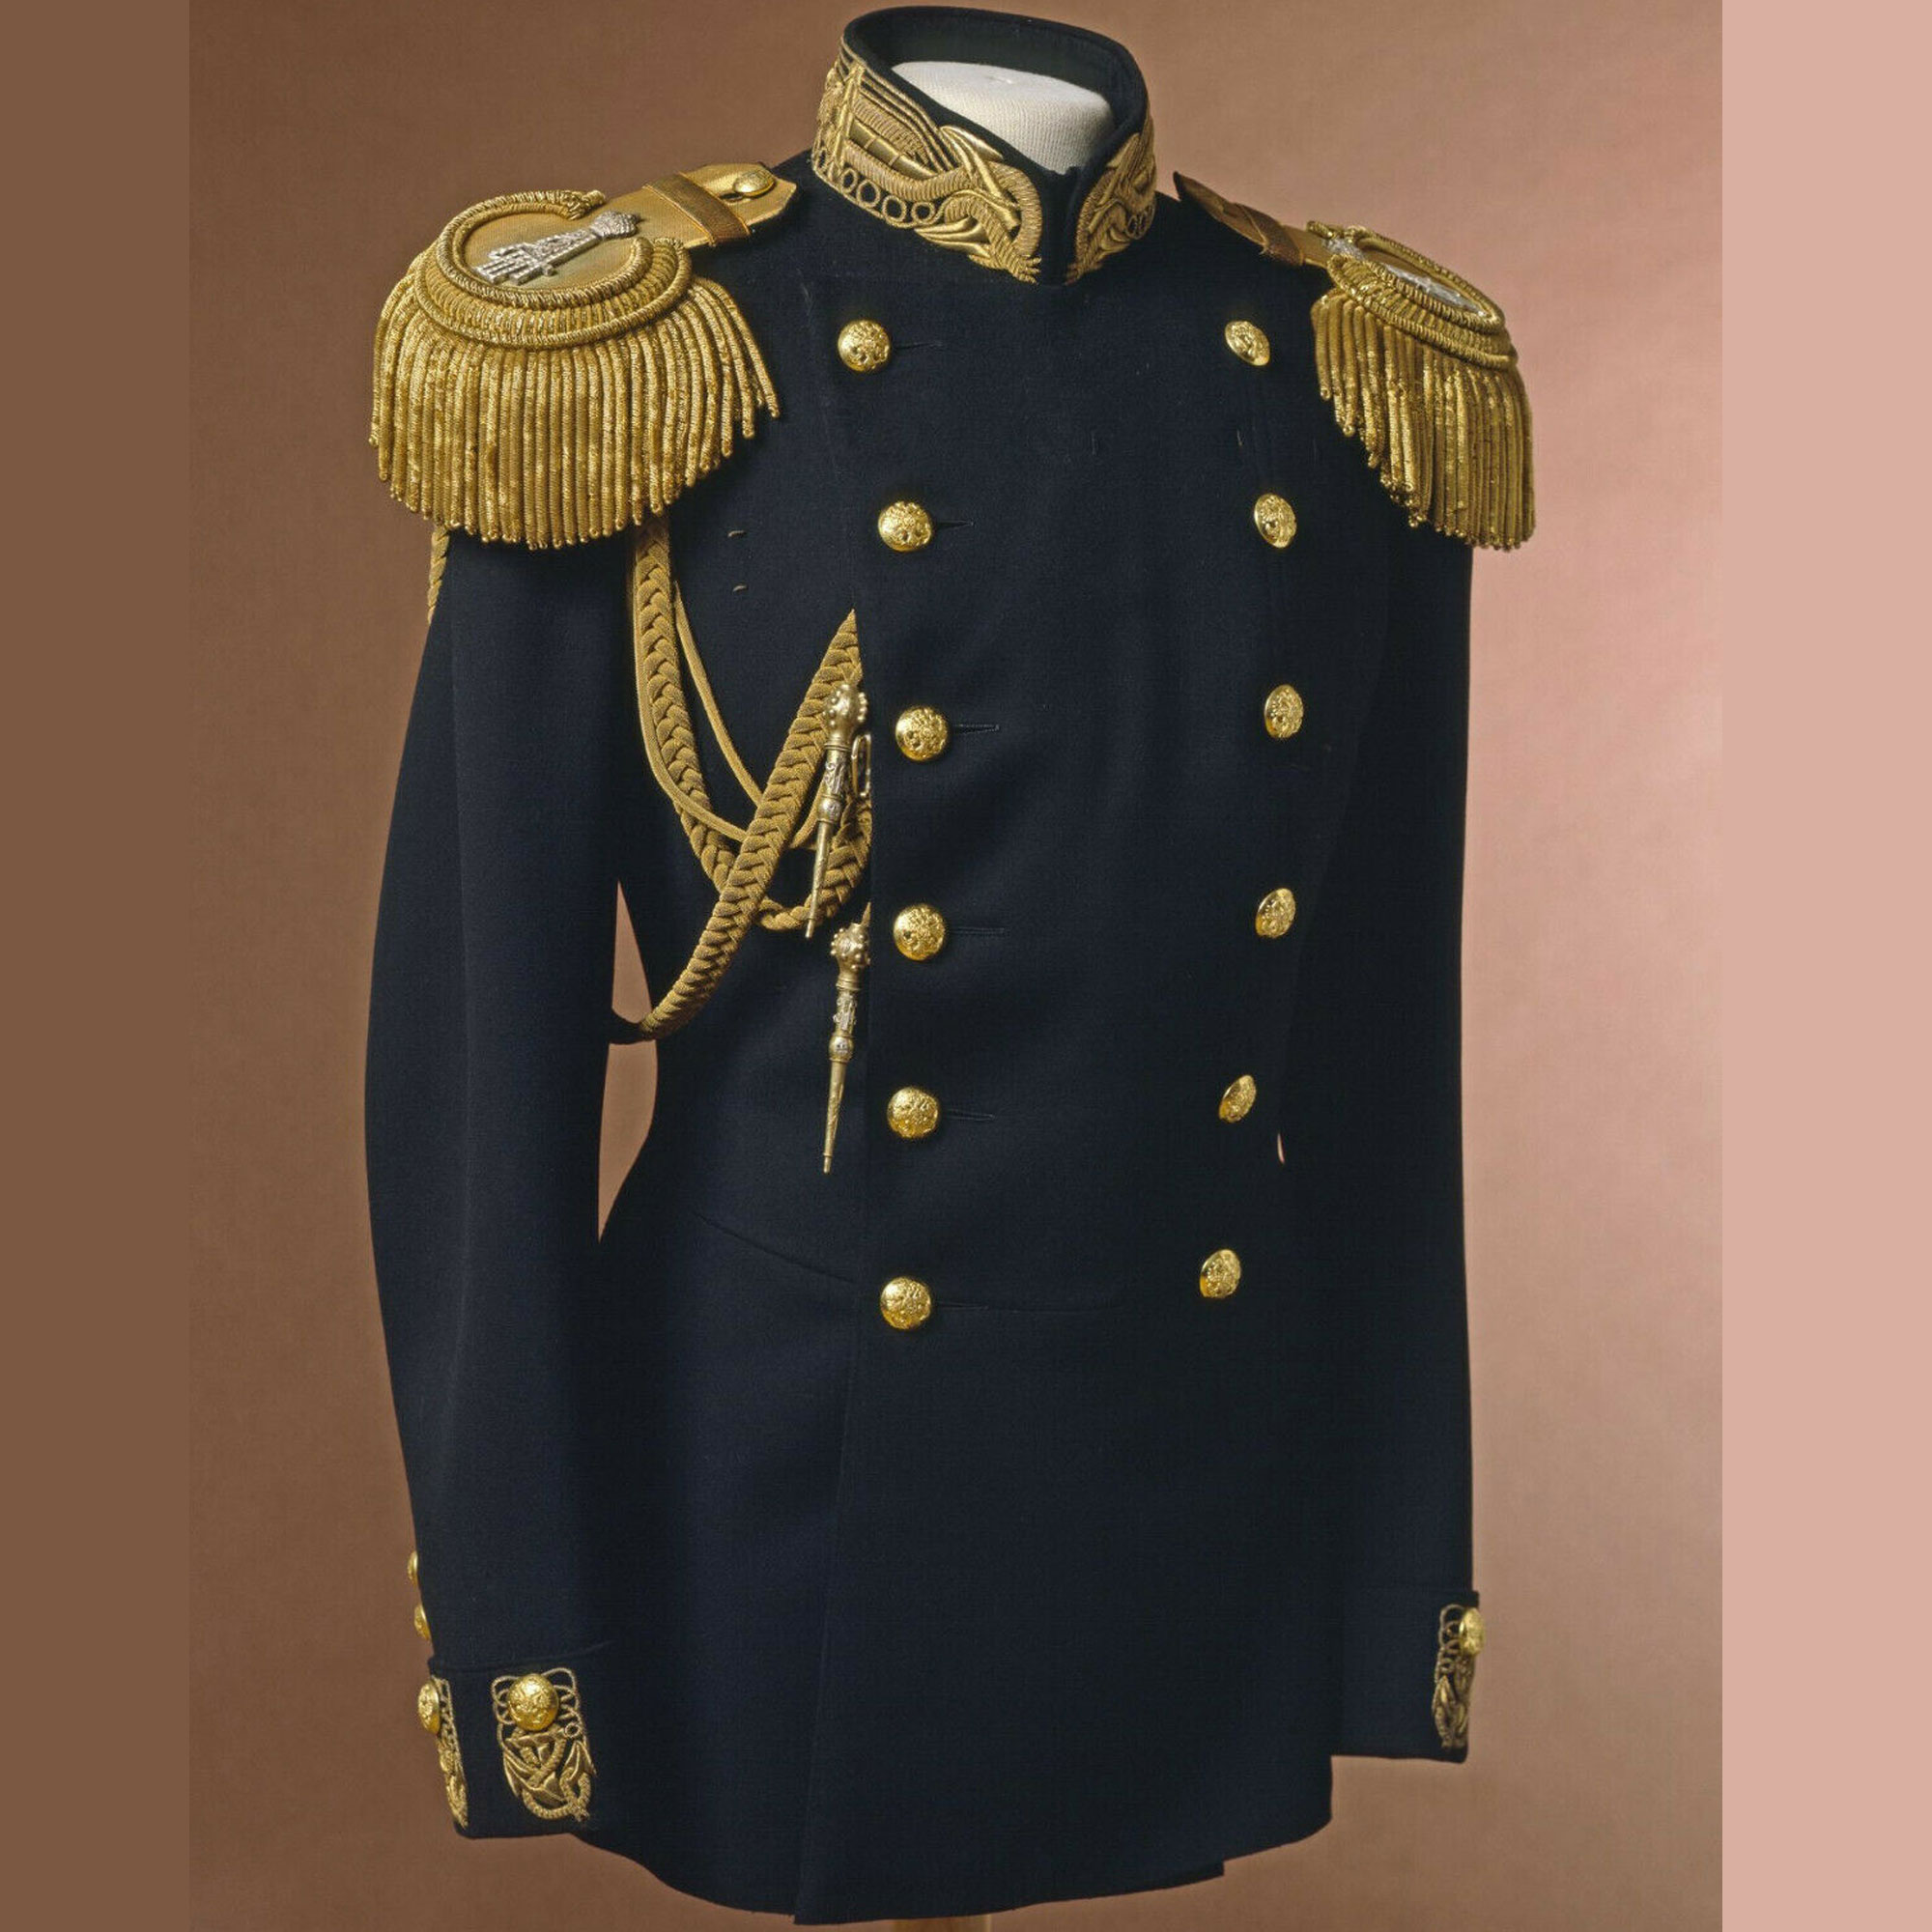 New Men's Black Military Uniforms Period British Jacket Coat  - 591